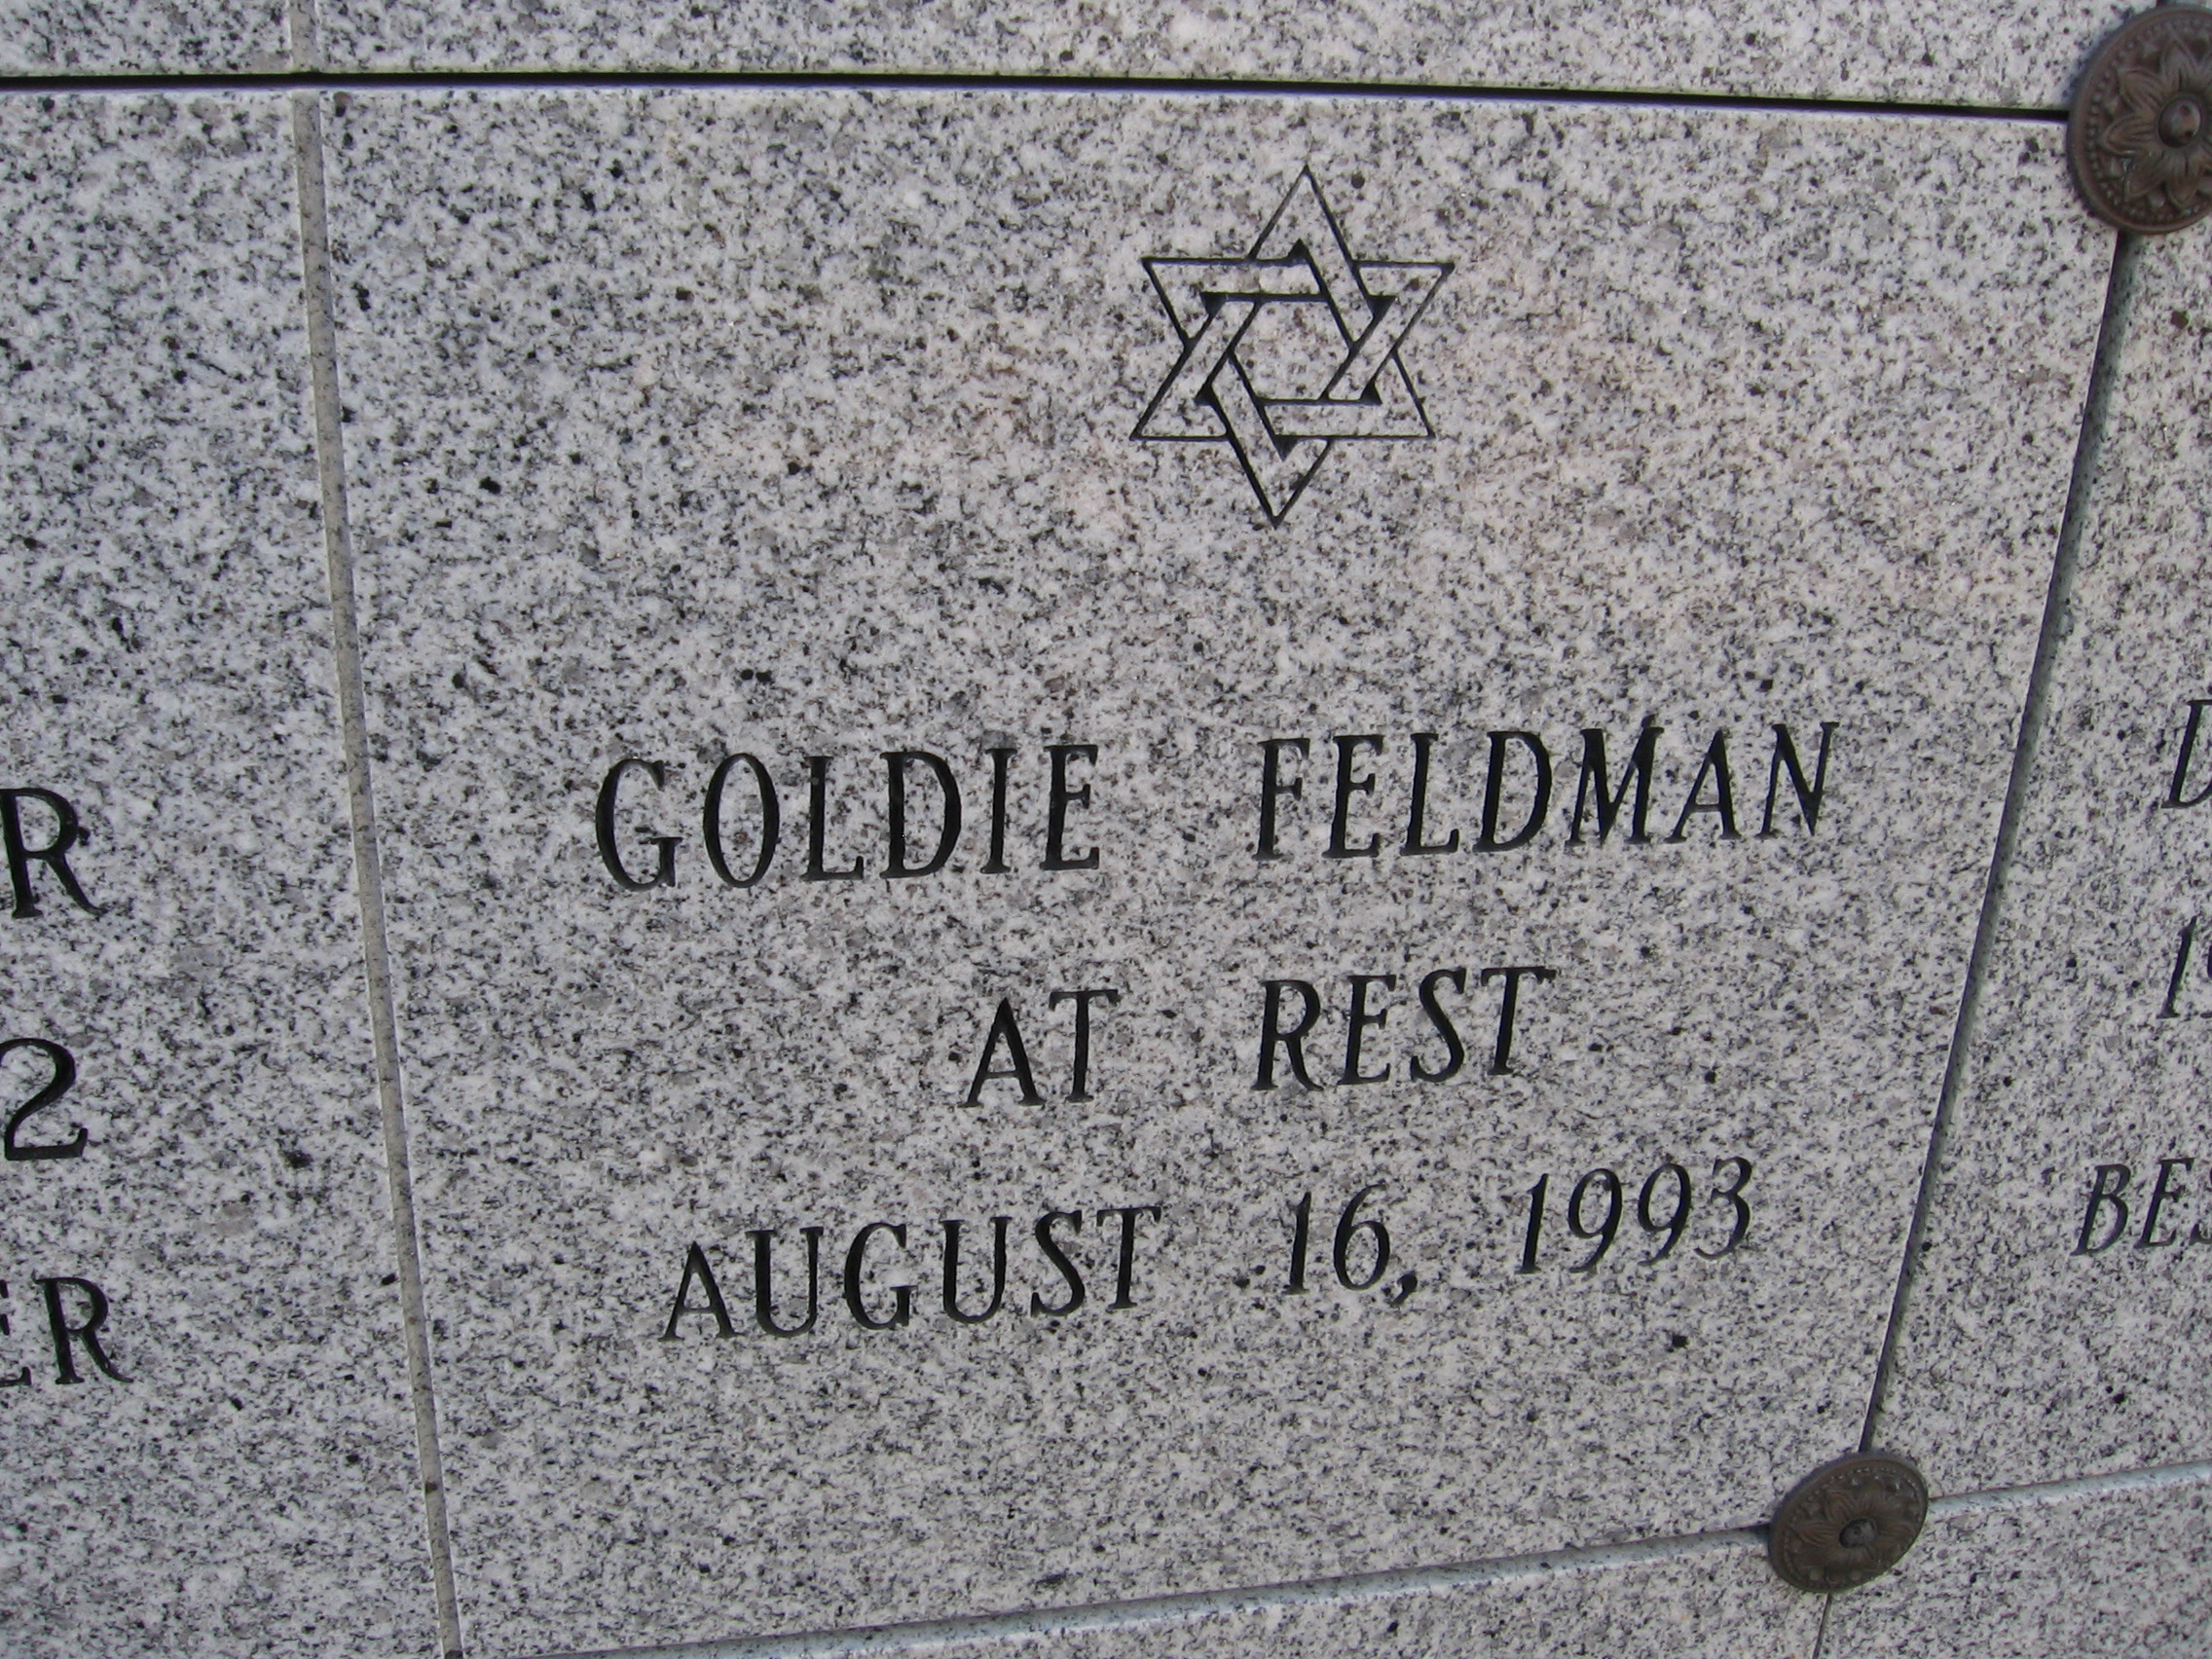 Goldie Feldman